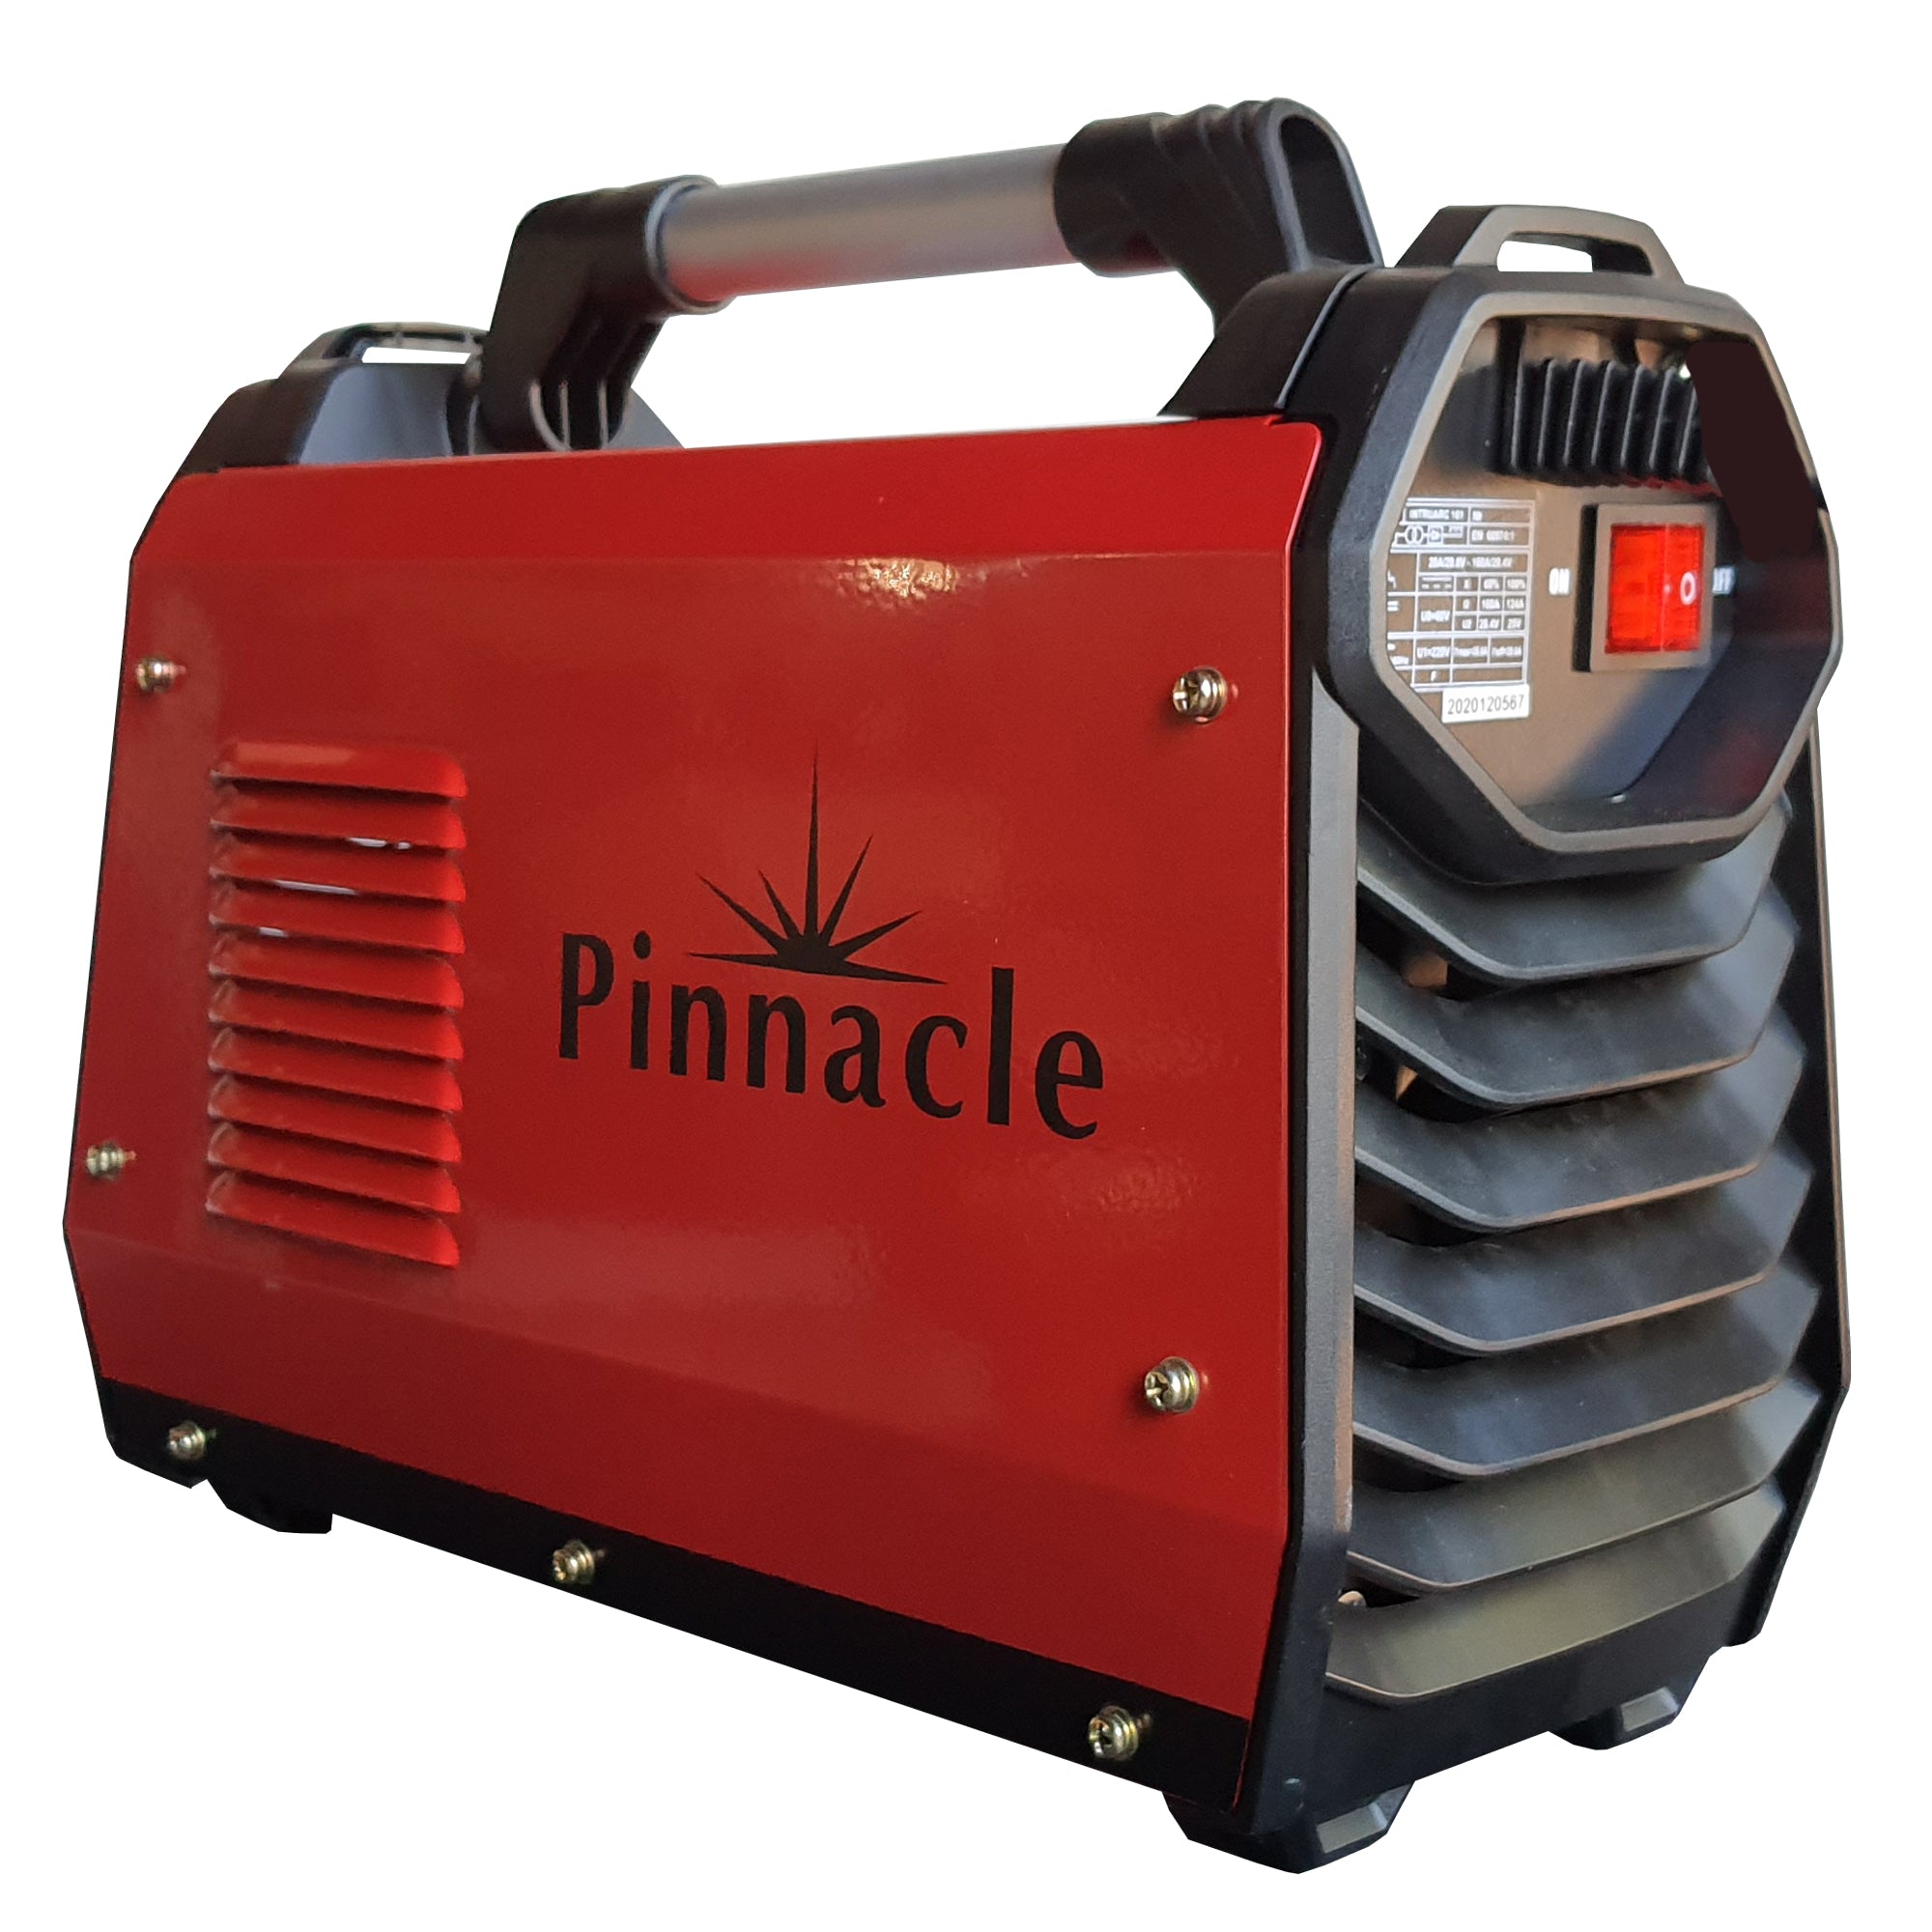 NEW Pinnacle IntruARC 161 Welding Machine - 160 Amp Welder Inverter